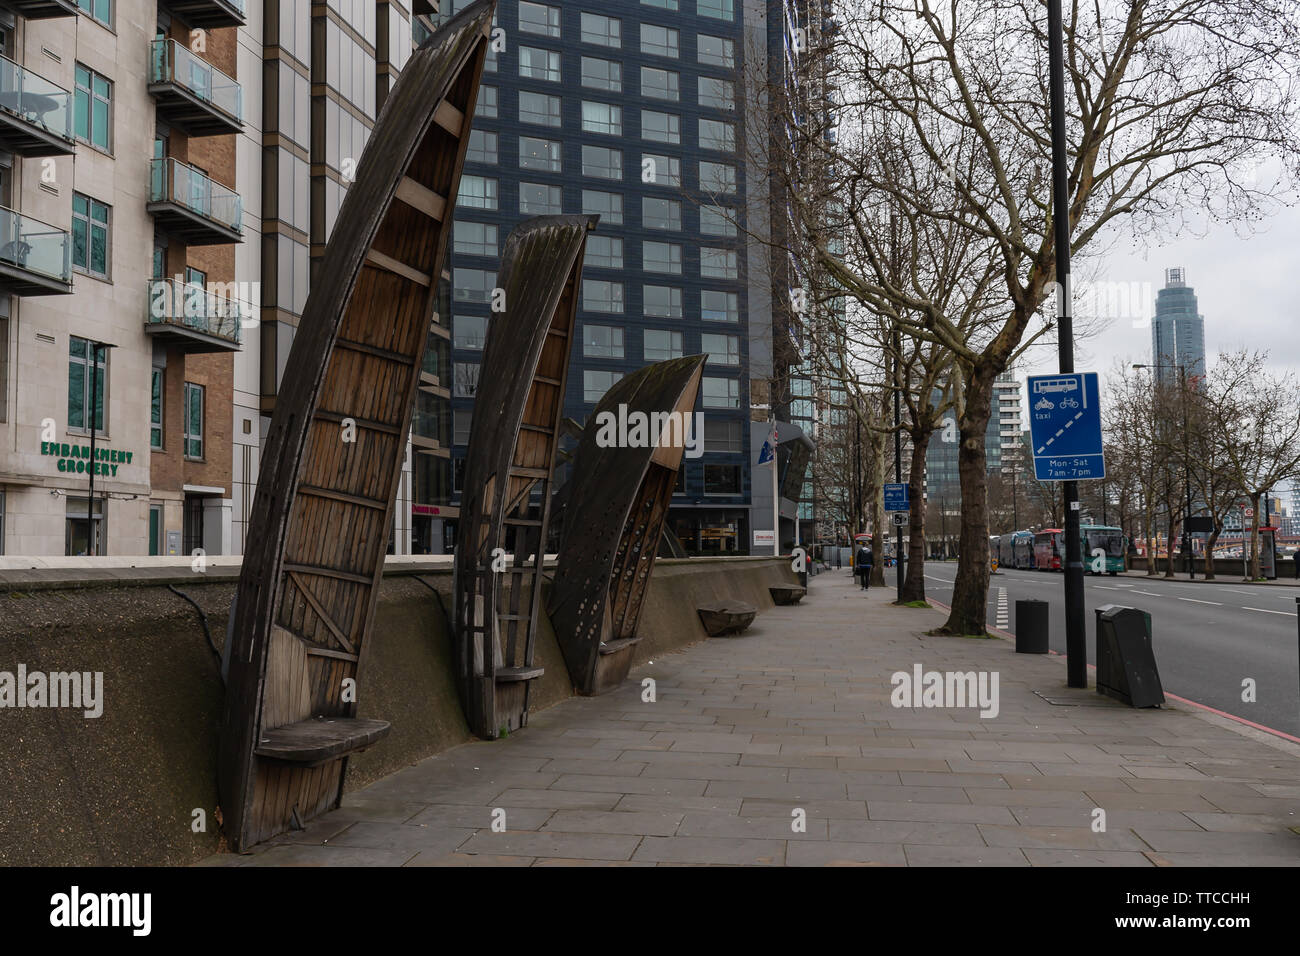 London - Albert Embankment, Lambeth - March 20, 2019 Stock Photo